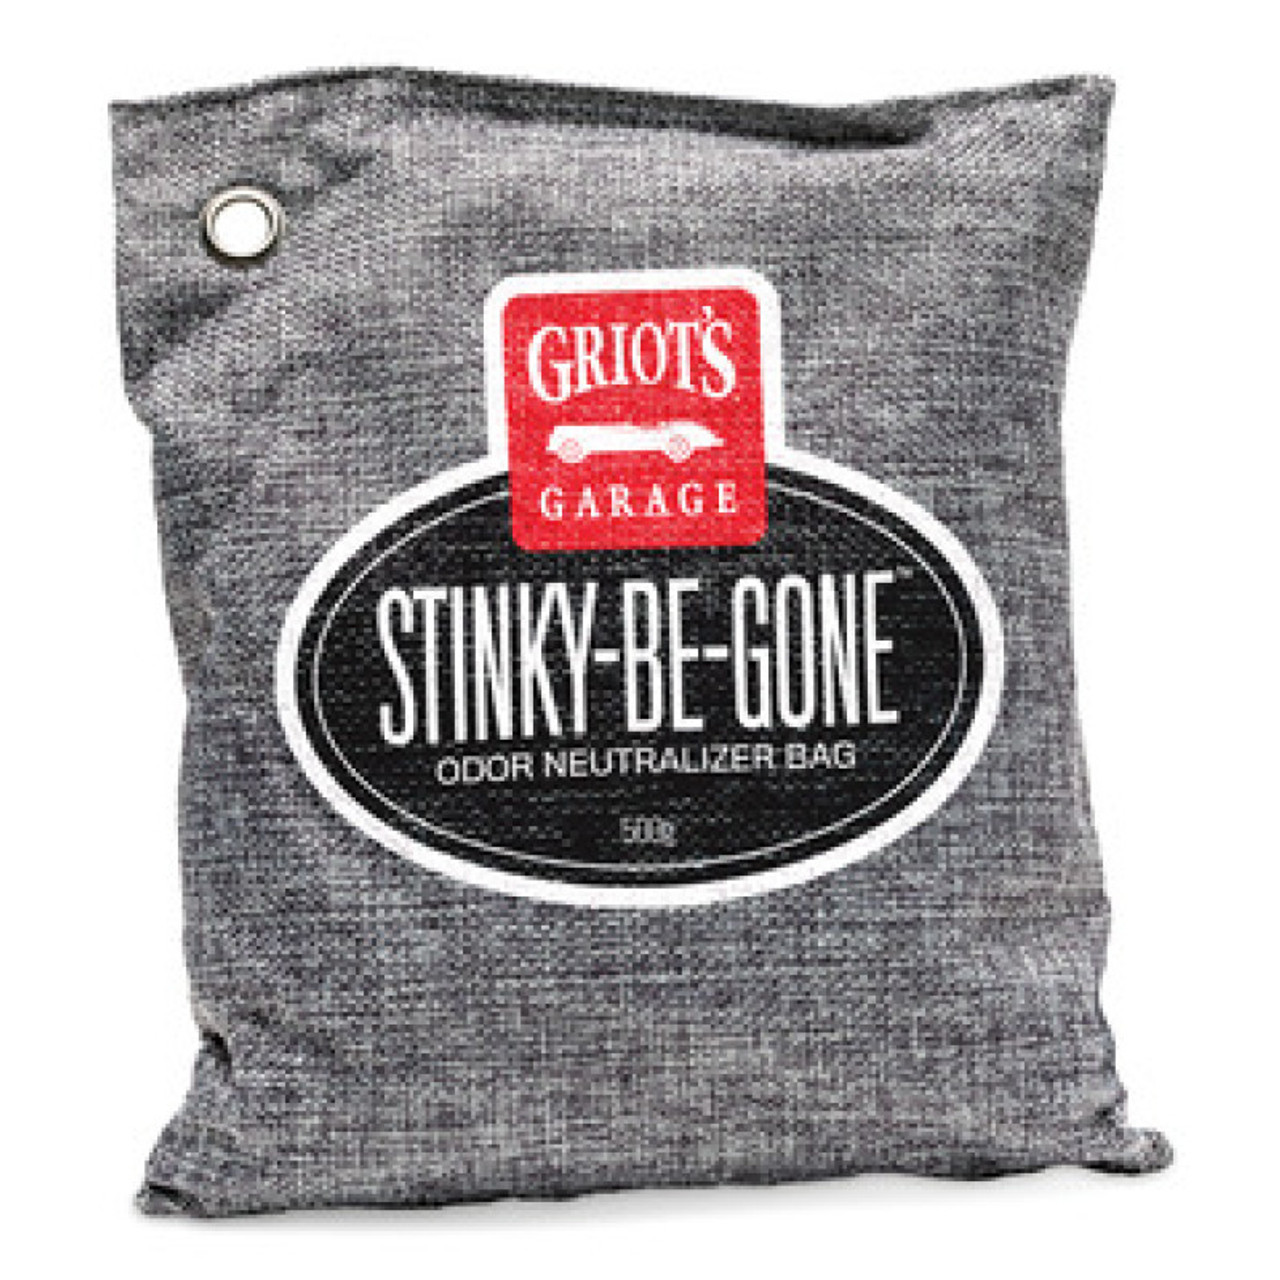 Griots Garage Stinky-Be-Gone Odor Neutralizing Bag